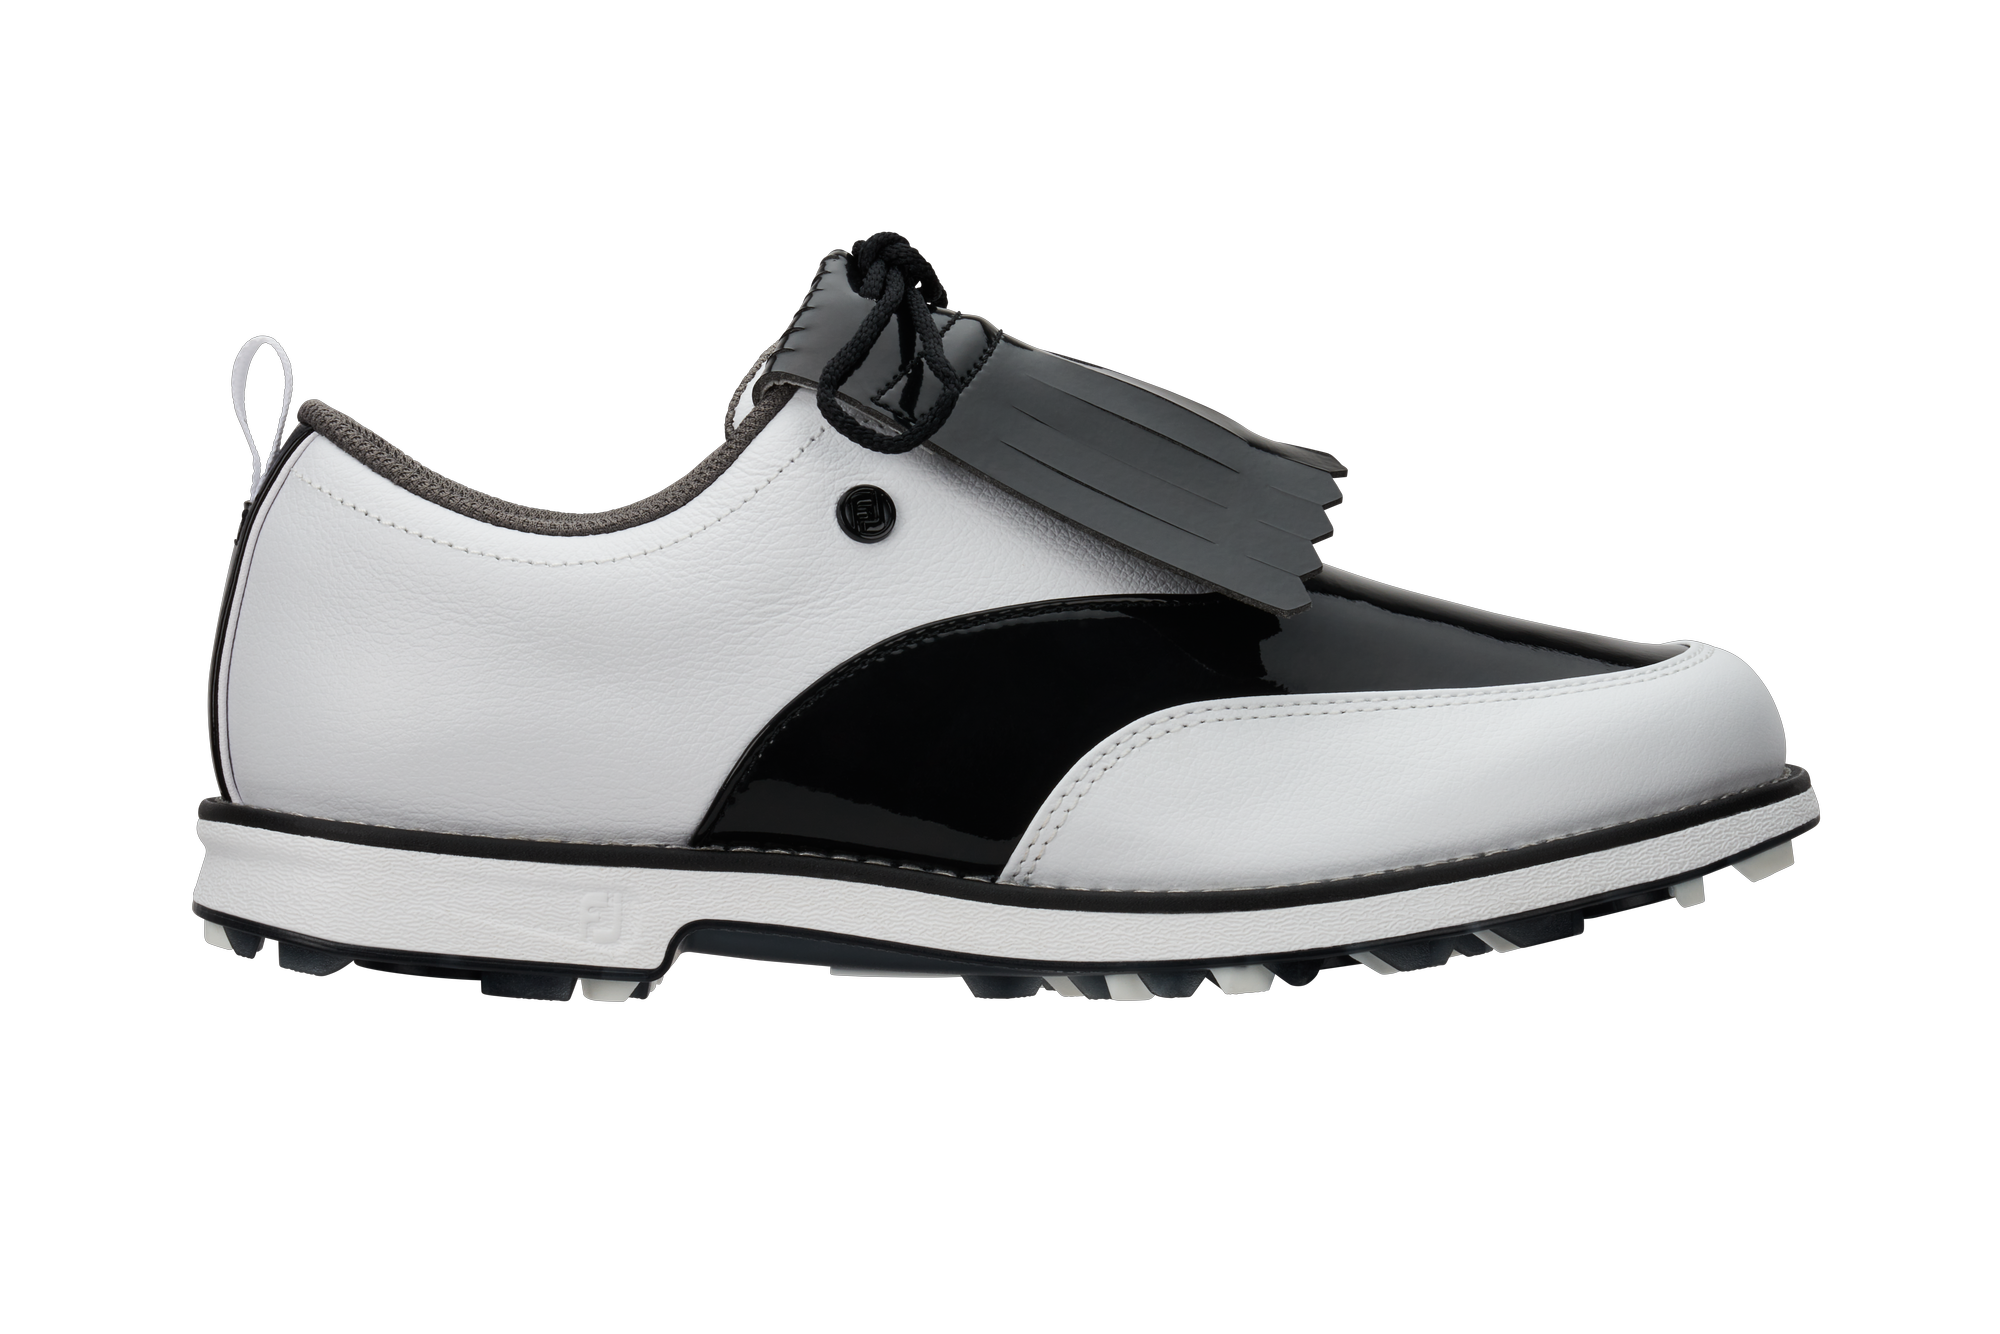 Women's Premier Series Issette Spiked Golf Shoe - White/Black